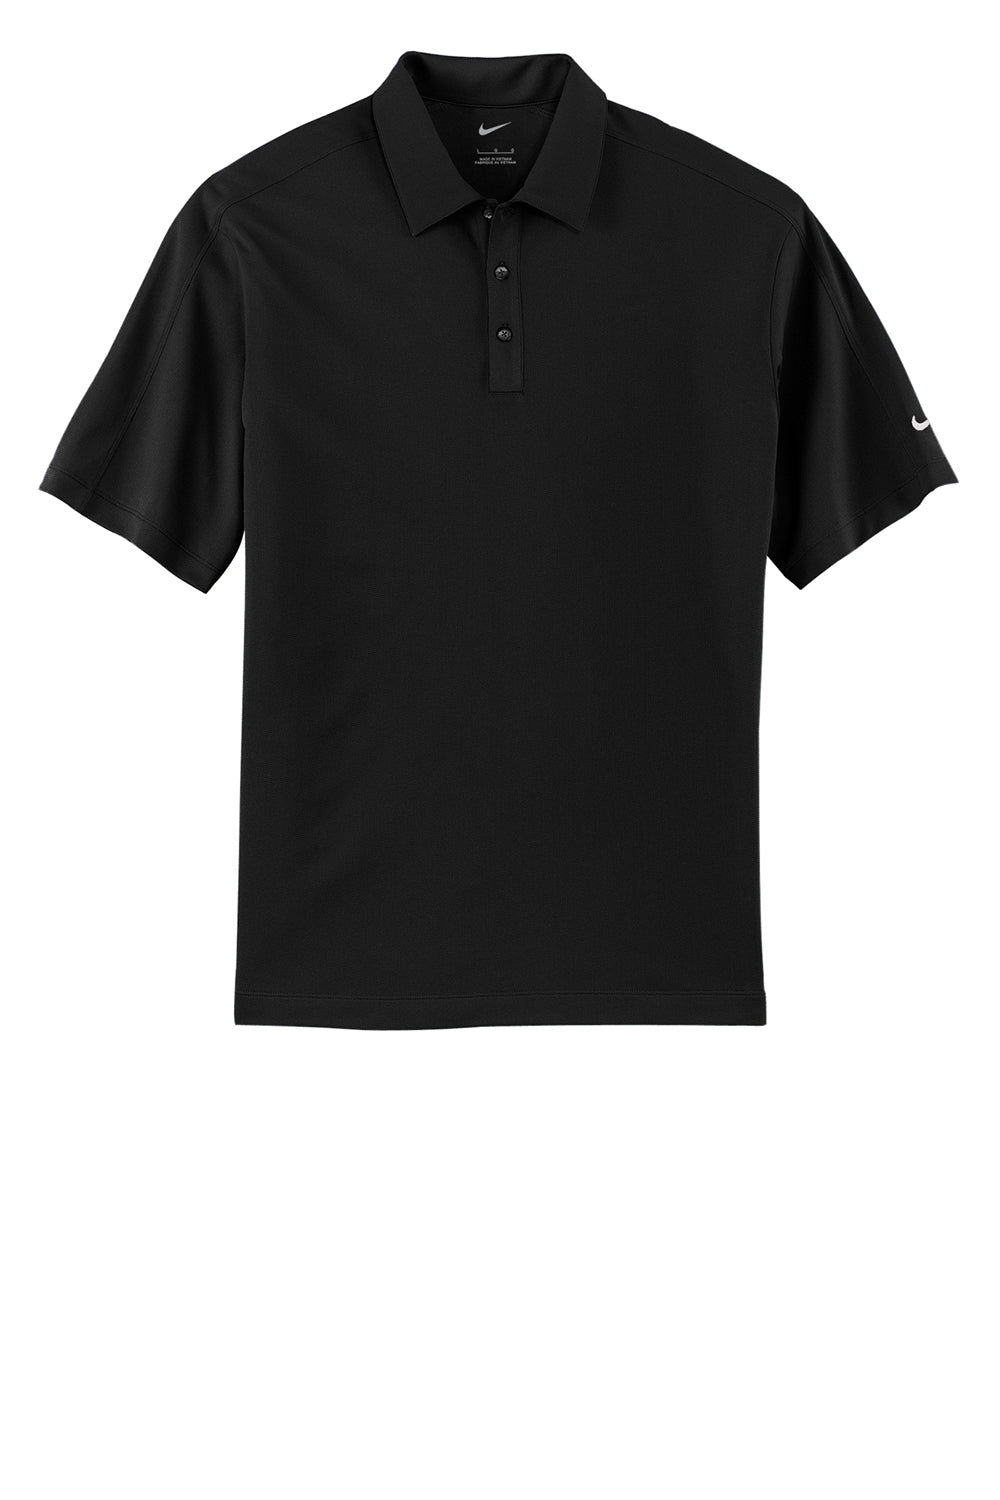 Nike 266998 Mens Tech Sport Dri-Fit Moisture Wicking Short Sleeve Polo Shirt Black Flat Front